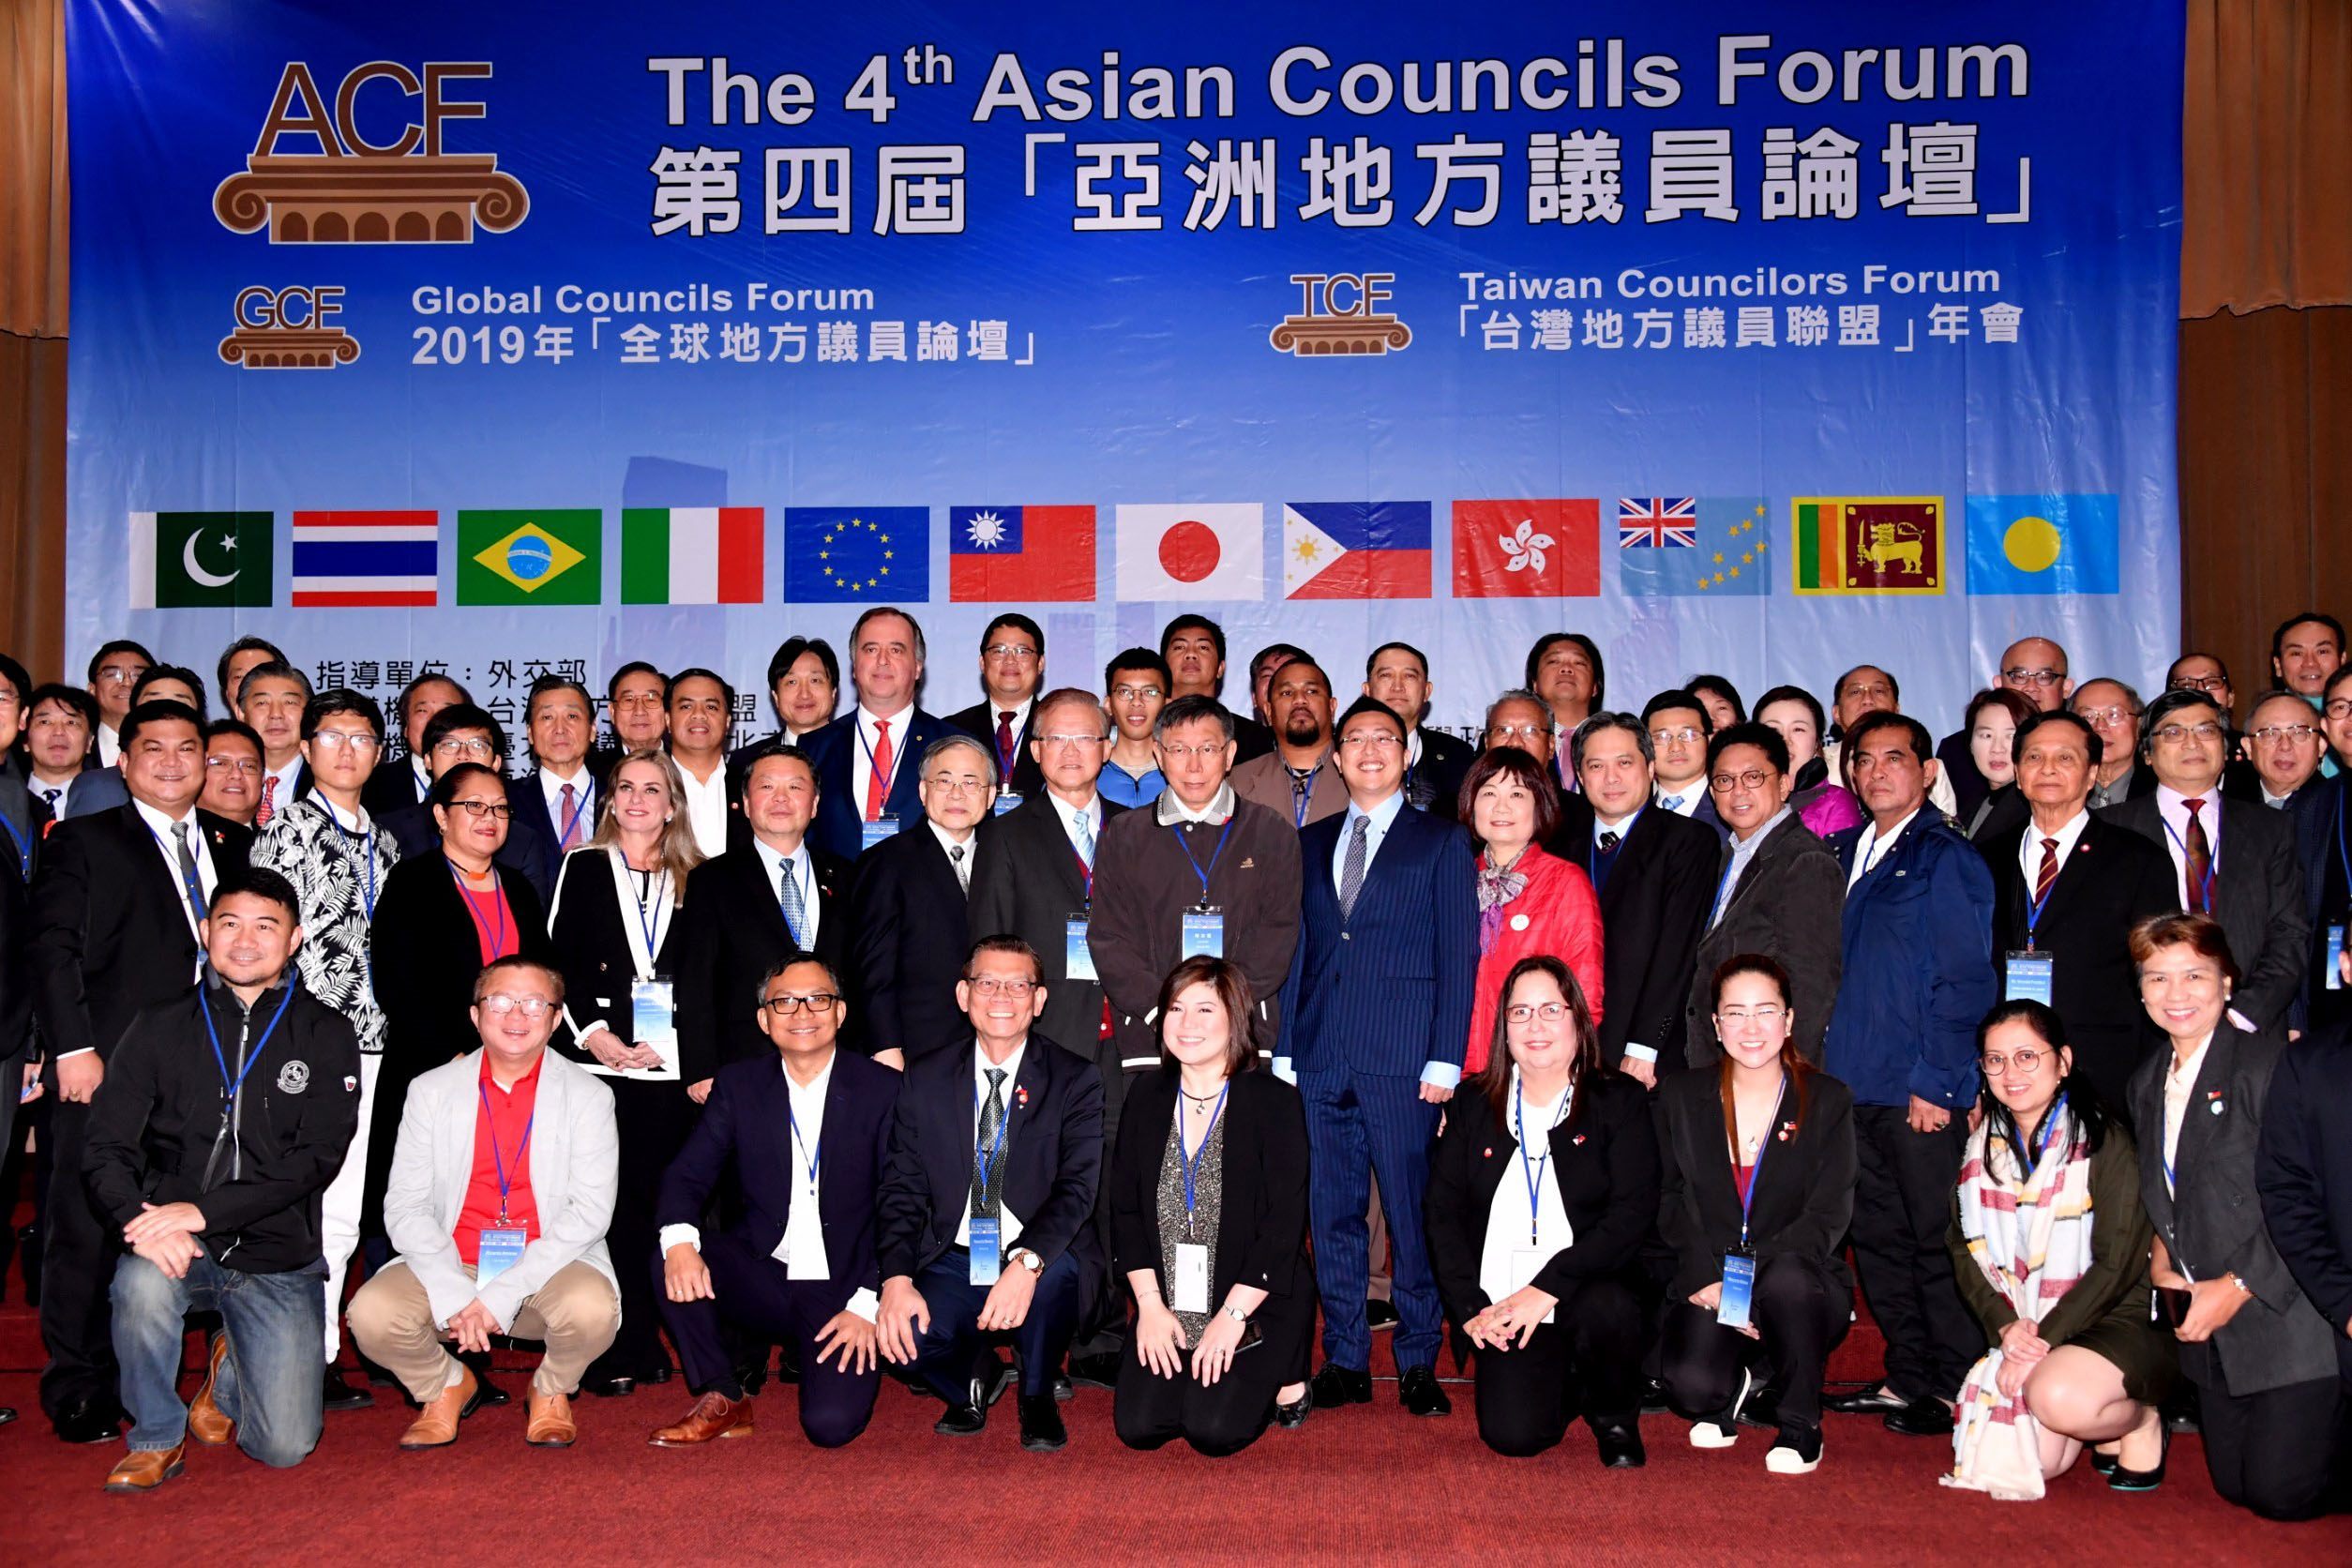 Mayor Ko with Asian Councils Forum delegates